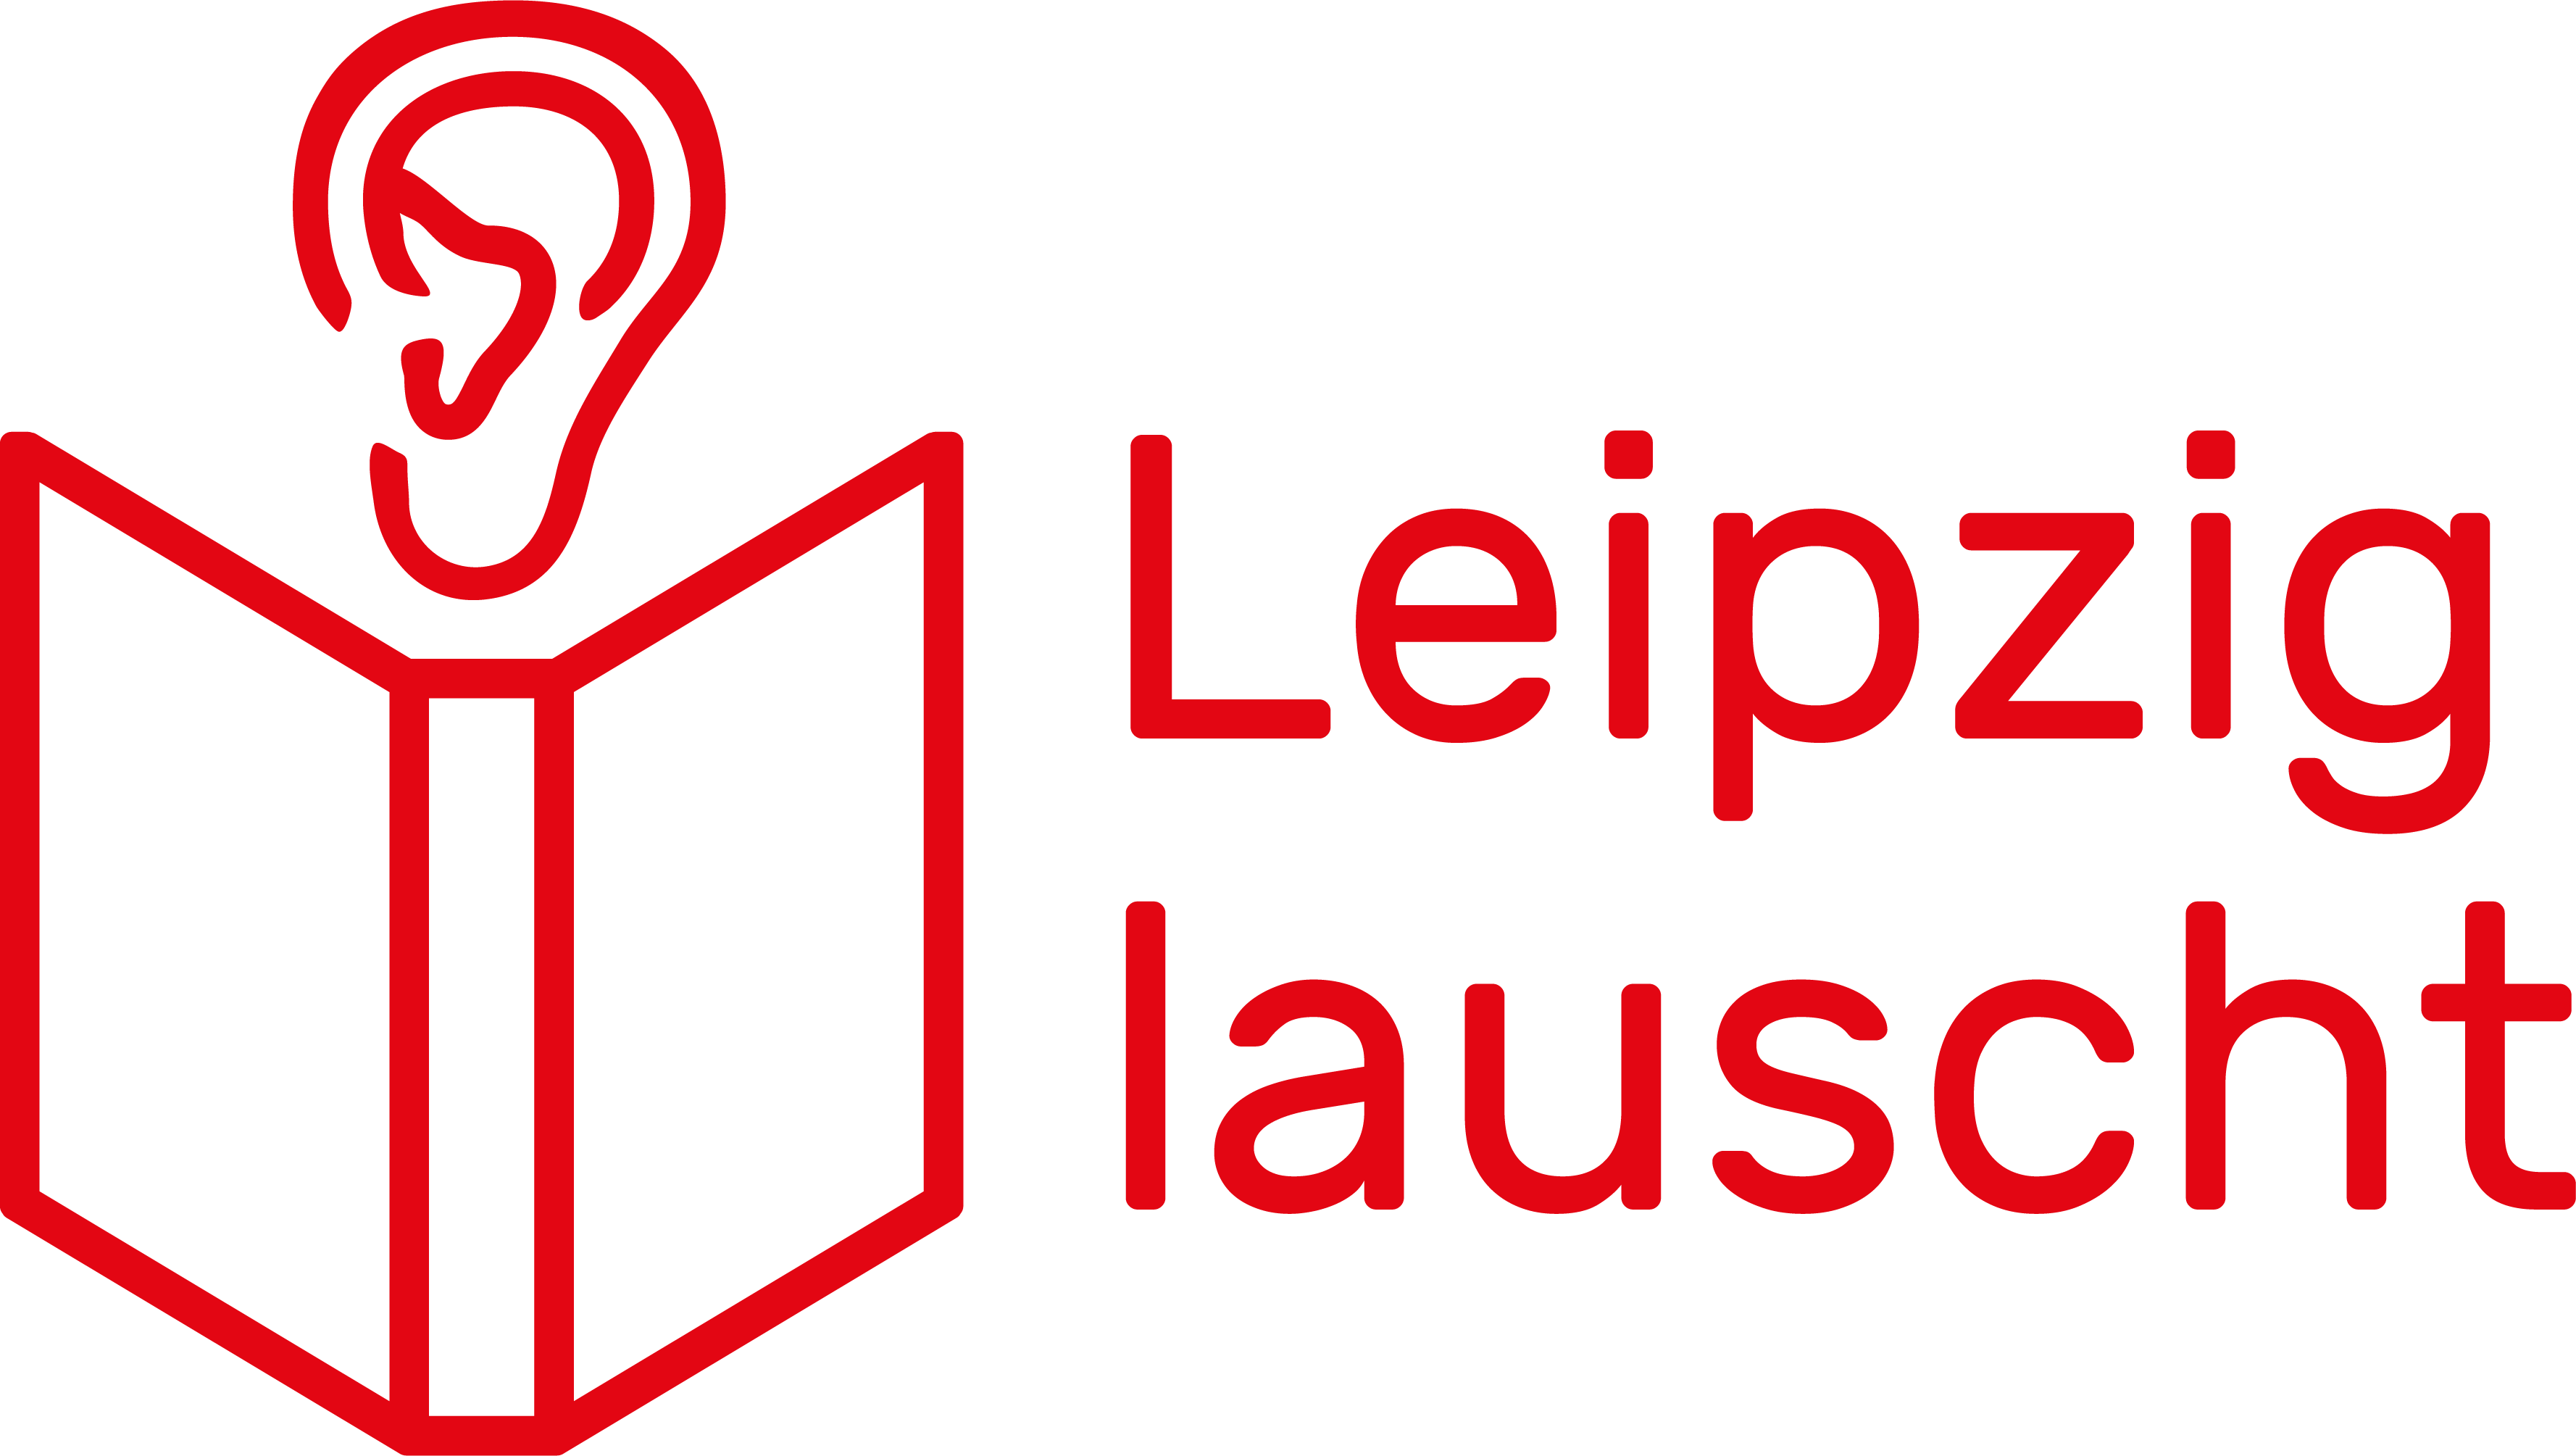 Logo-Text_Leipzig-lauscht_72ppi